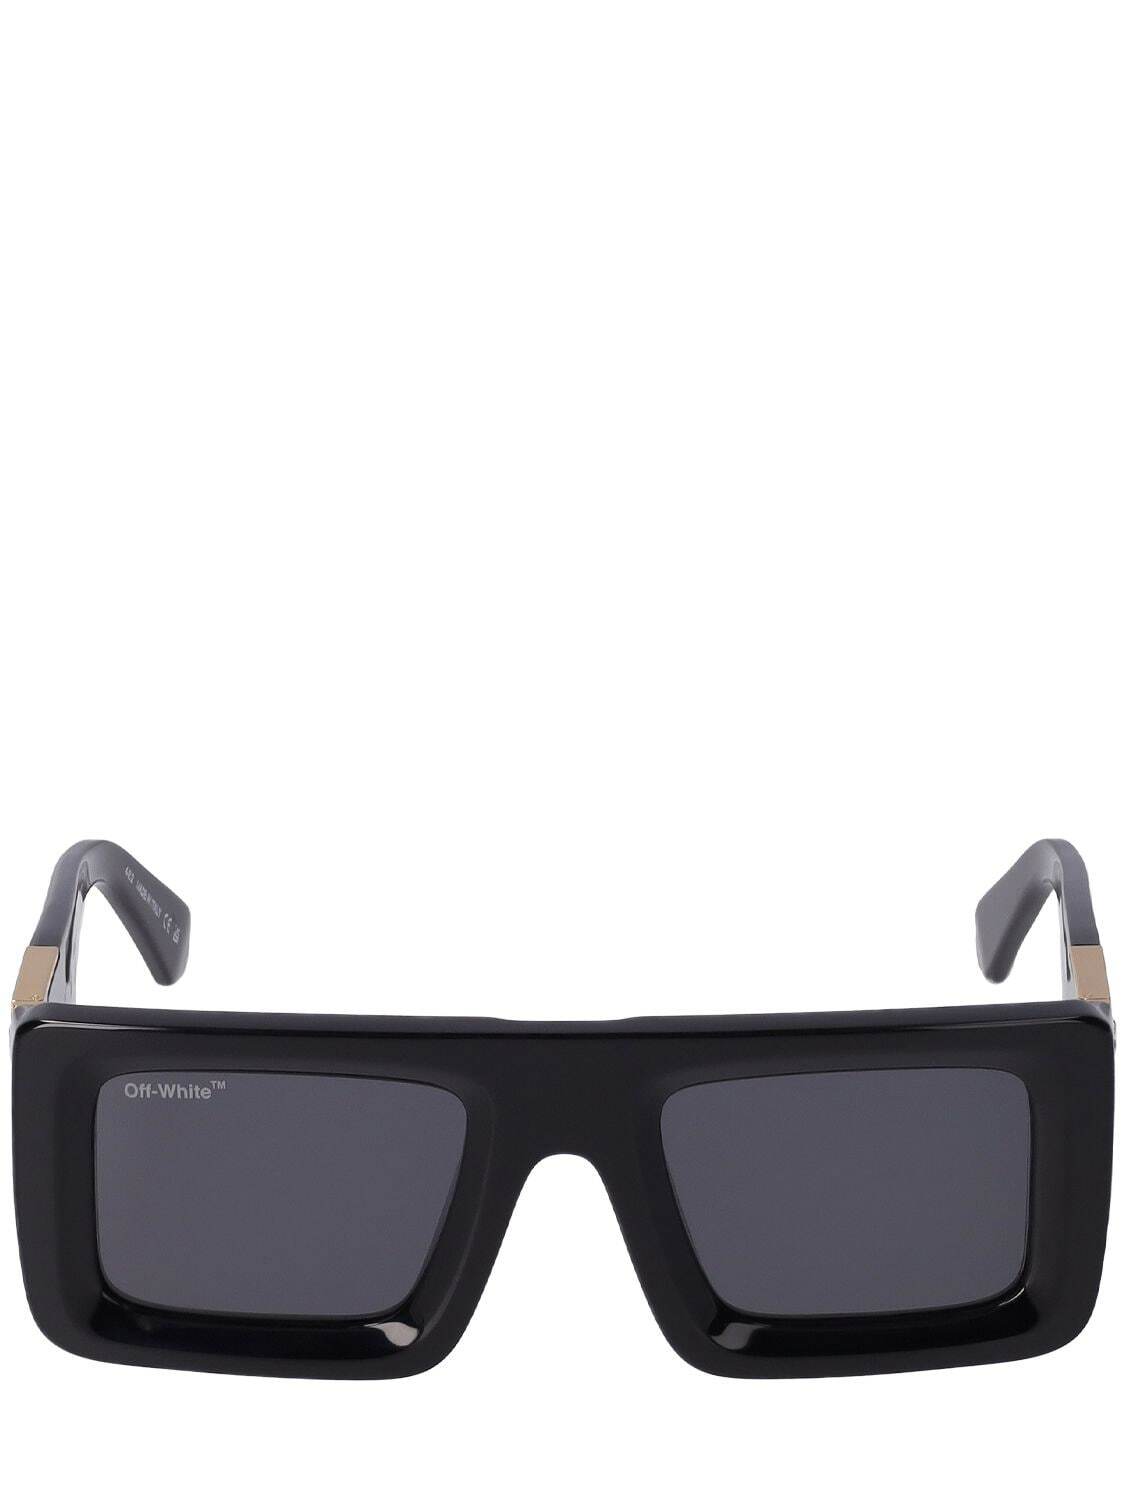 OFF-WHITE Leonardo Squared Acetate Sunglasses in black